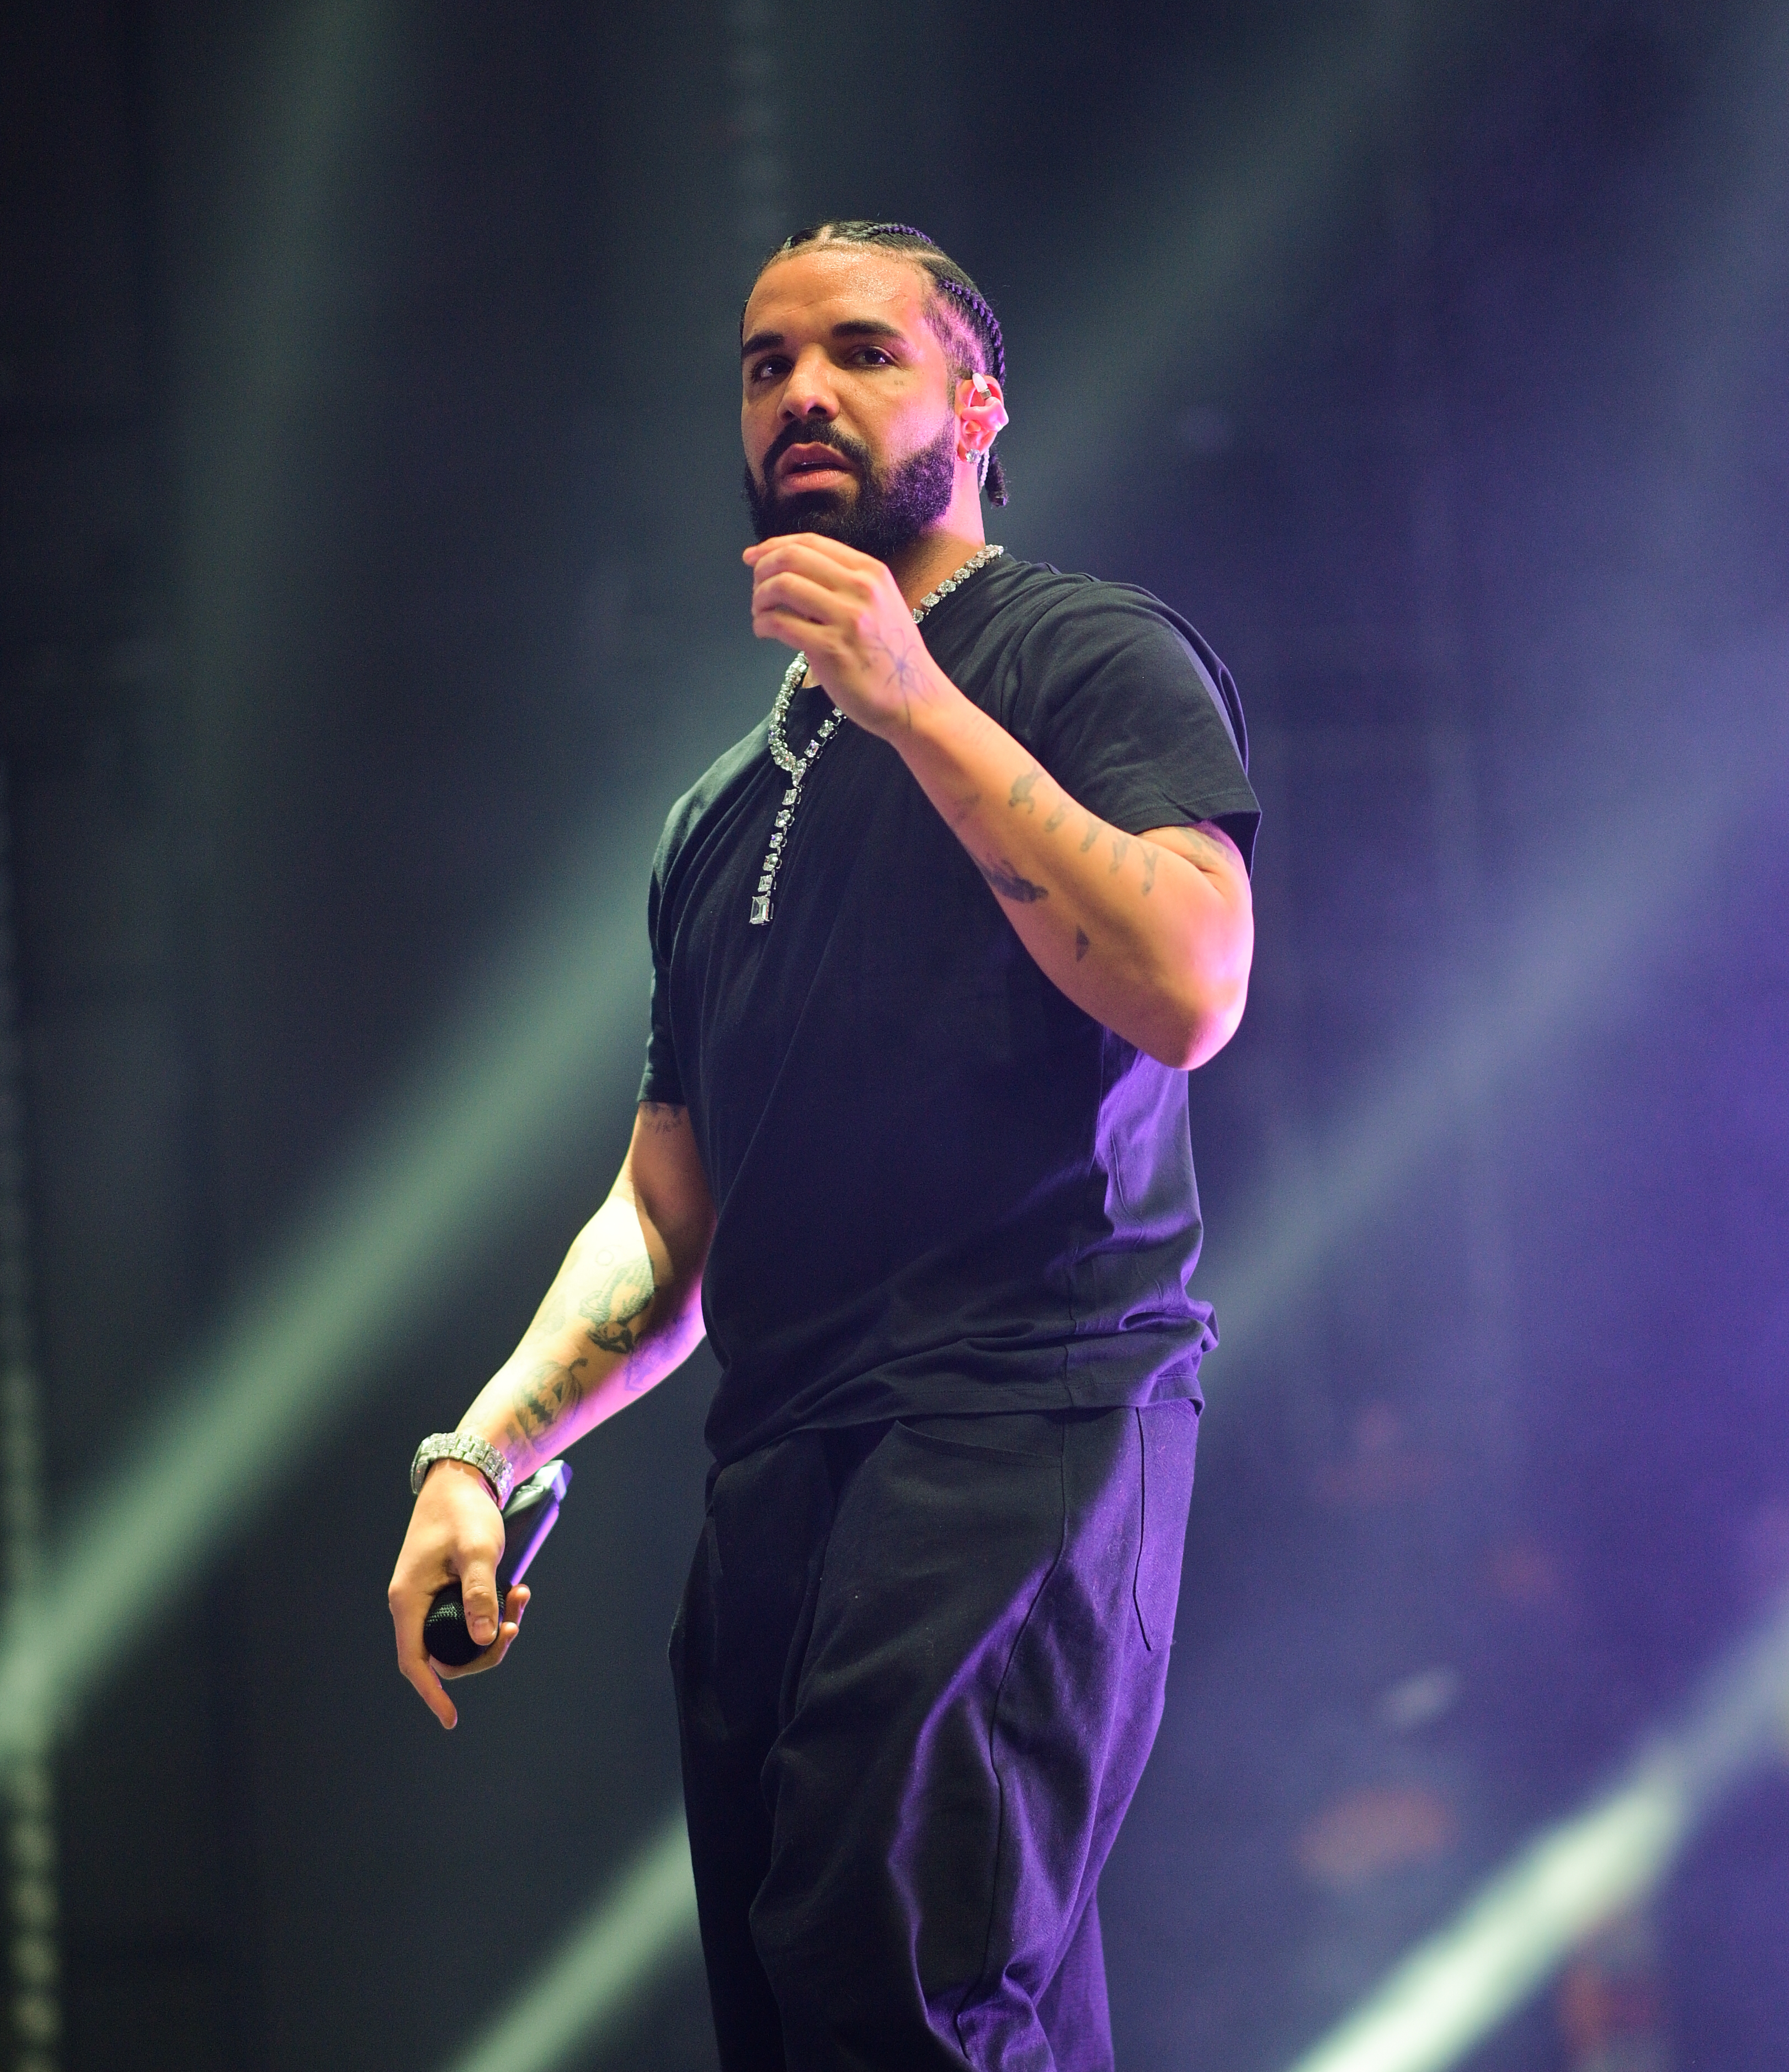 Drake onstage performing